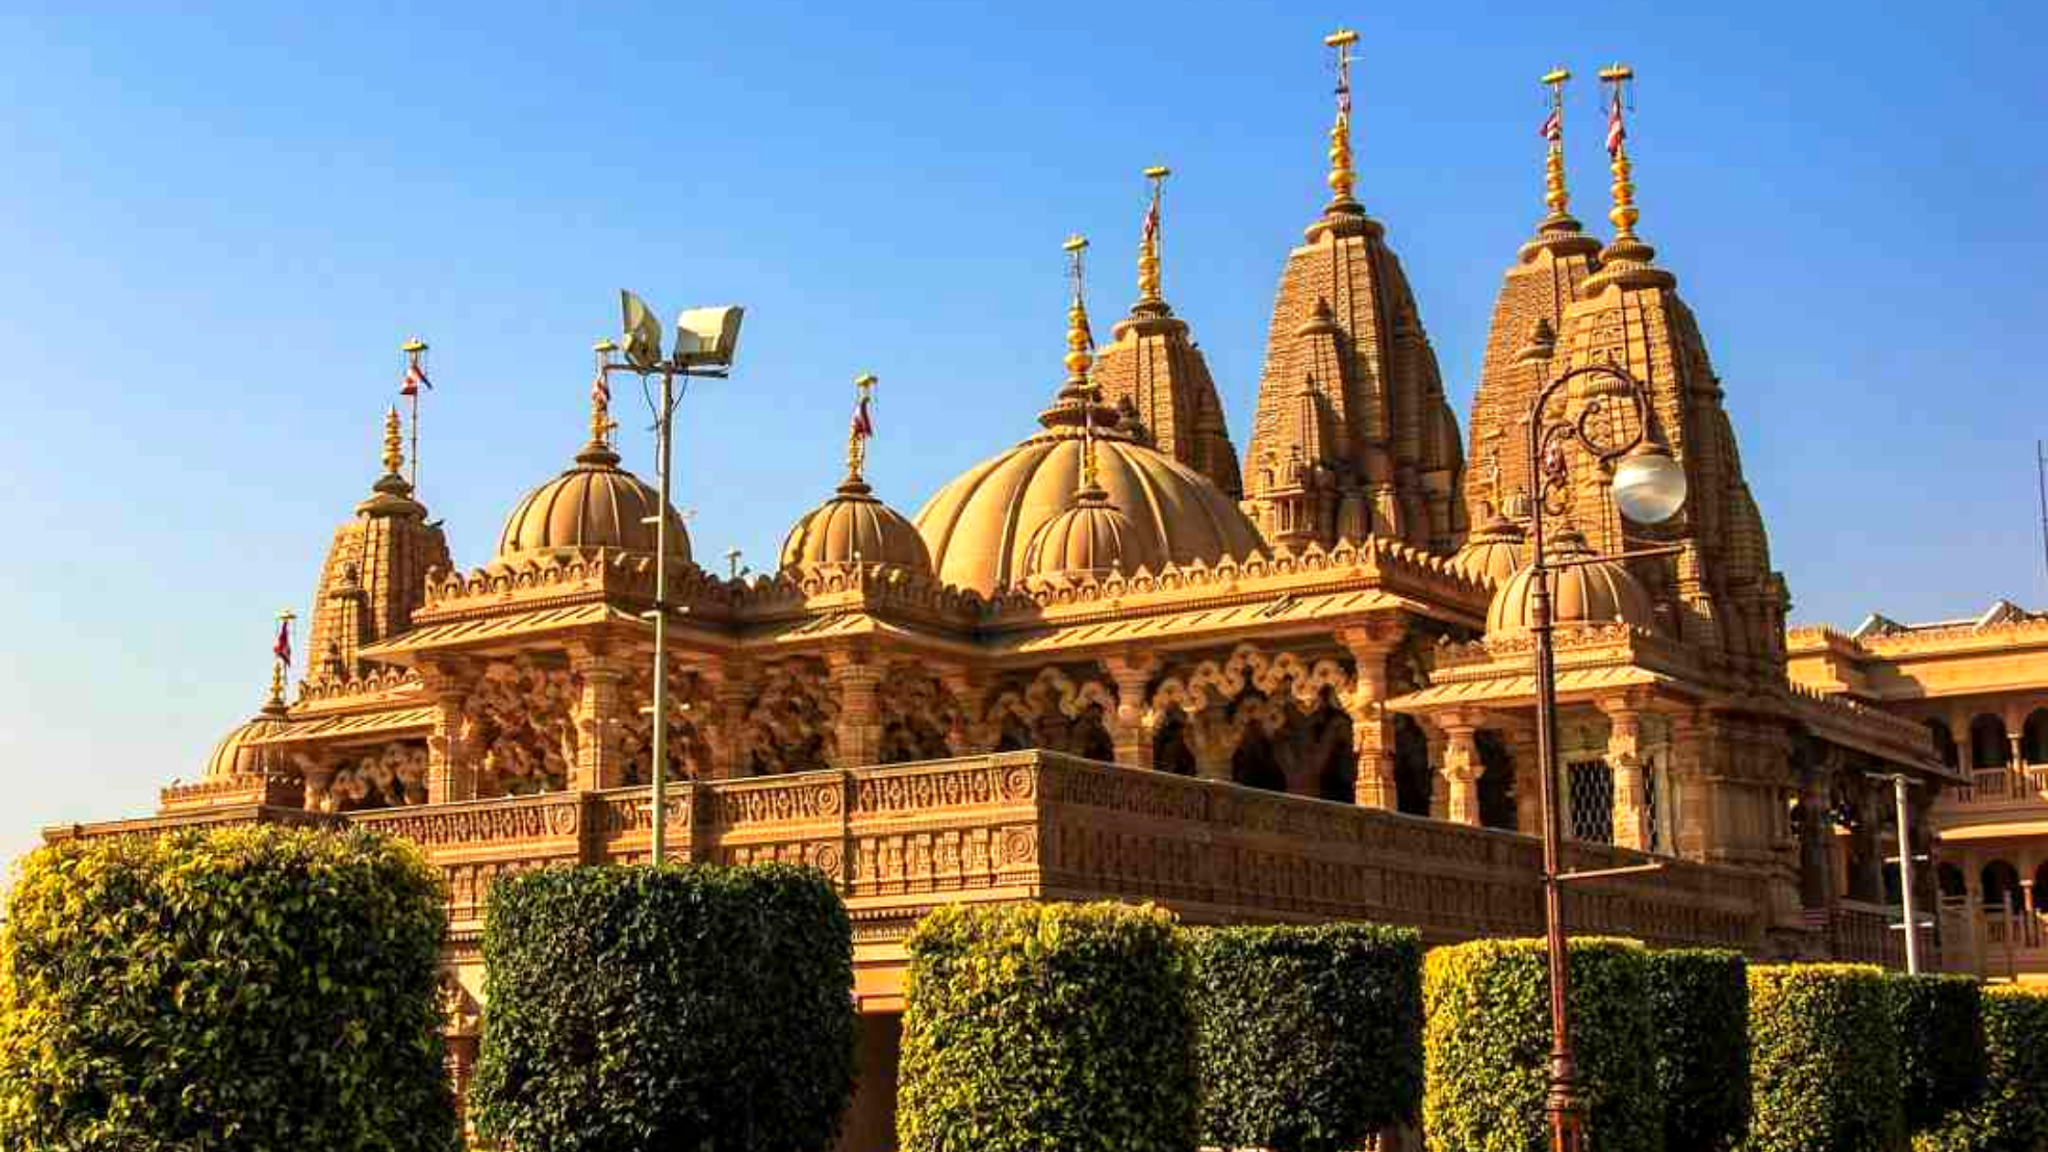 Information about visiting Akshardham temple of Jaipur